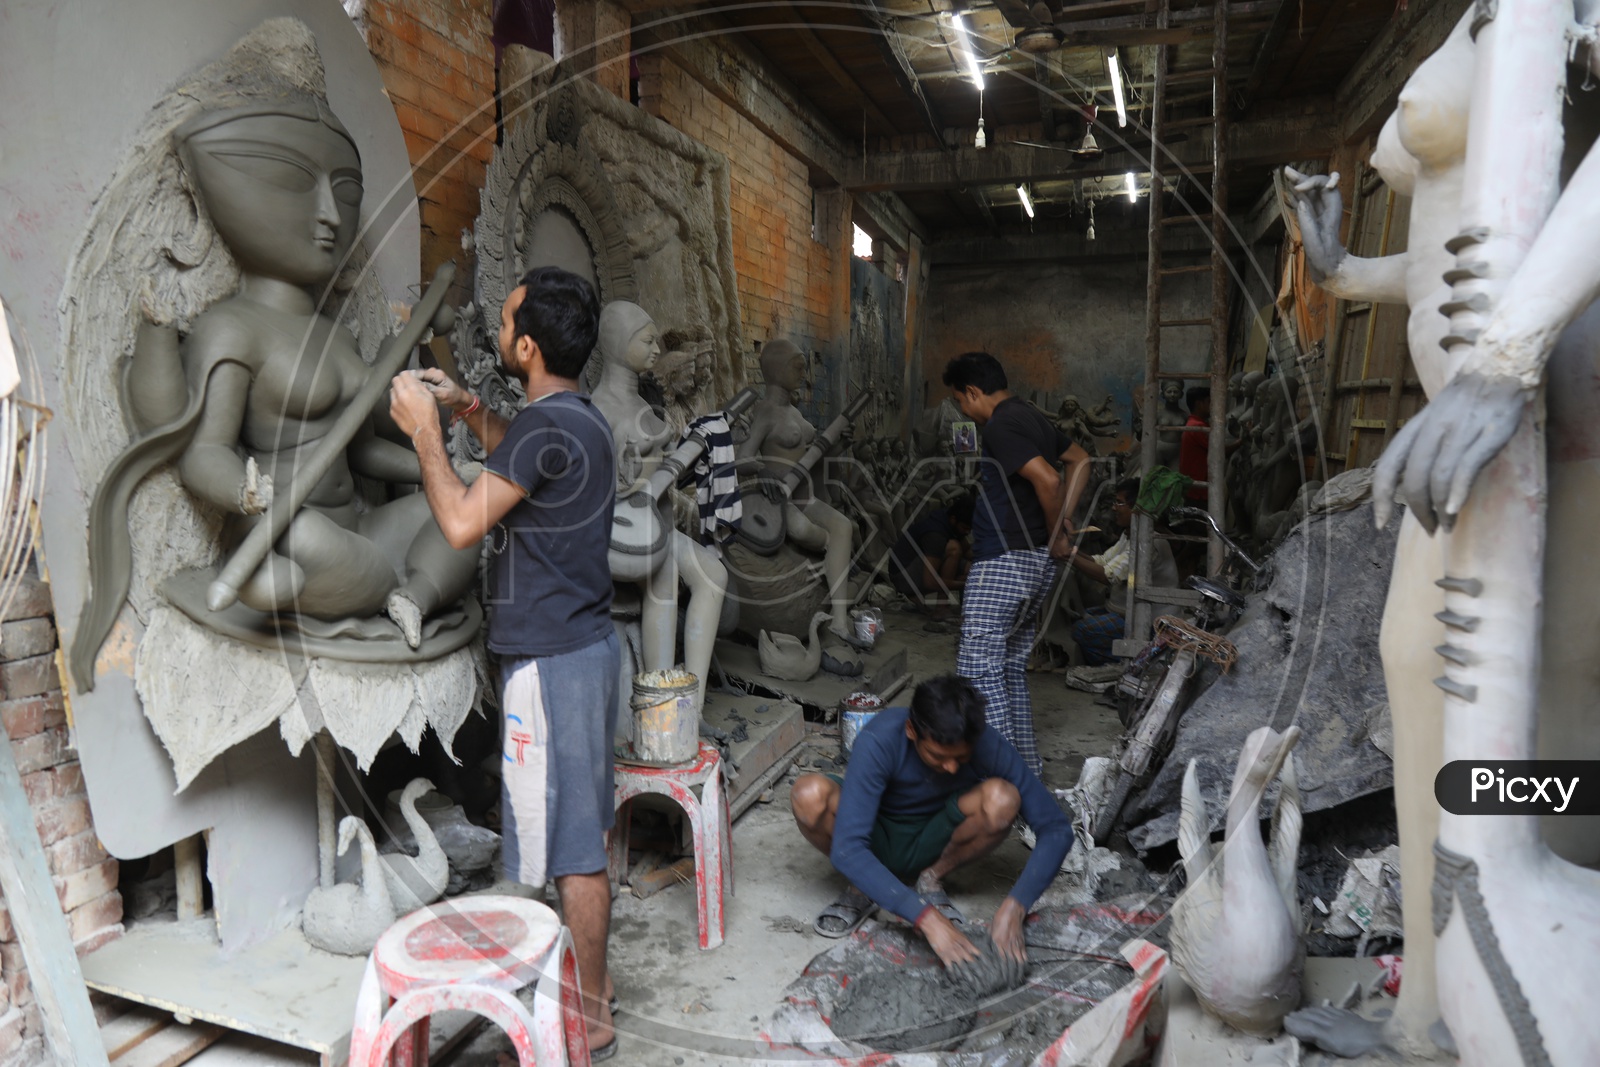 A Sculptor in Making Of Hindu Goddess Clay Idols